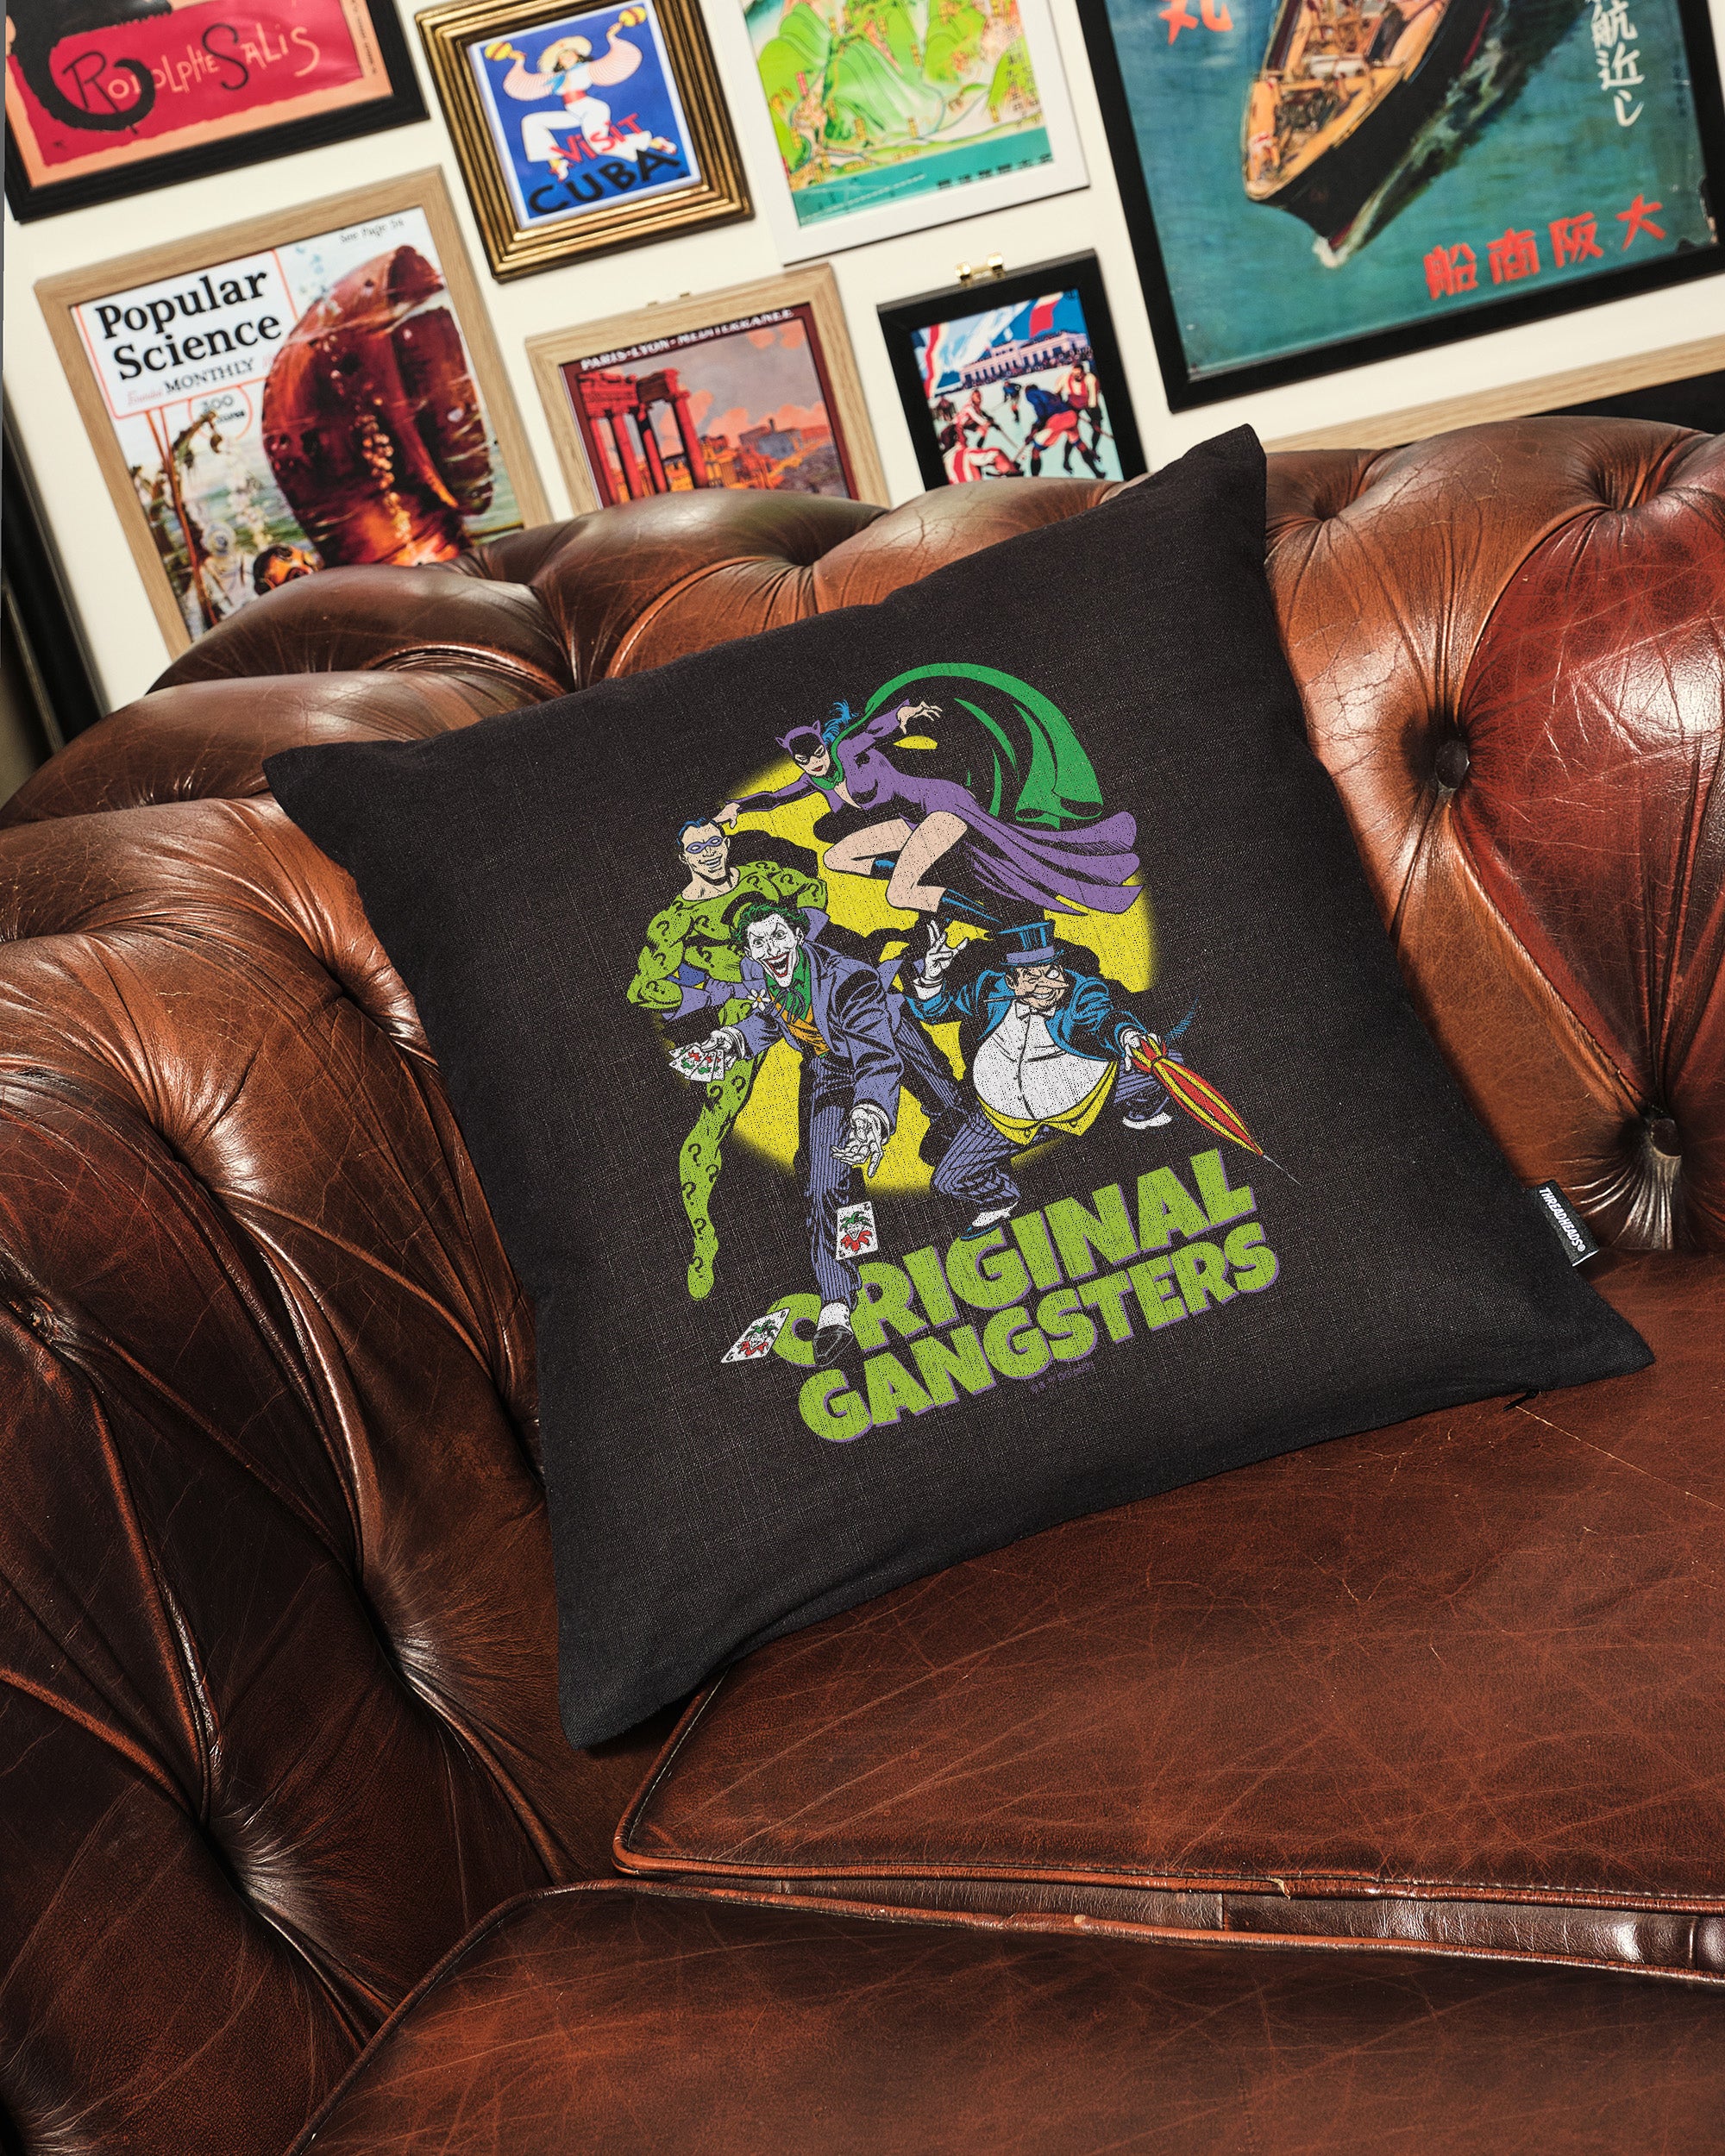 Original Gangsters Cushion